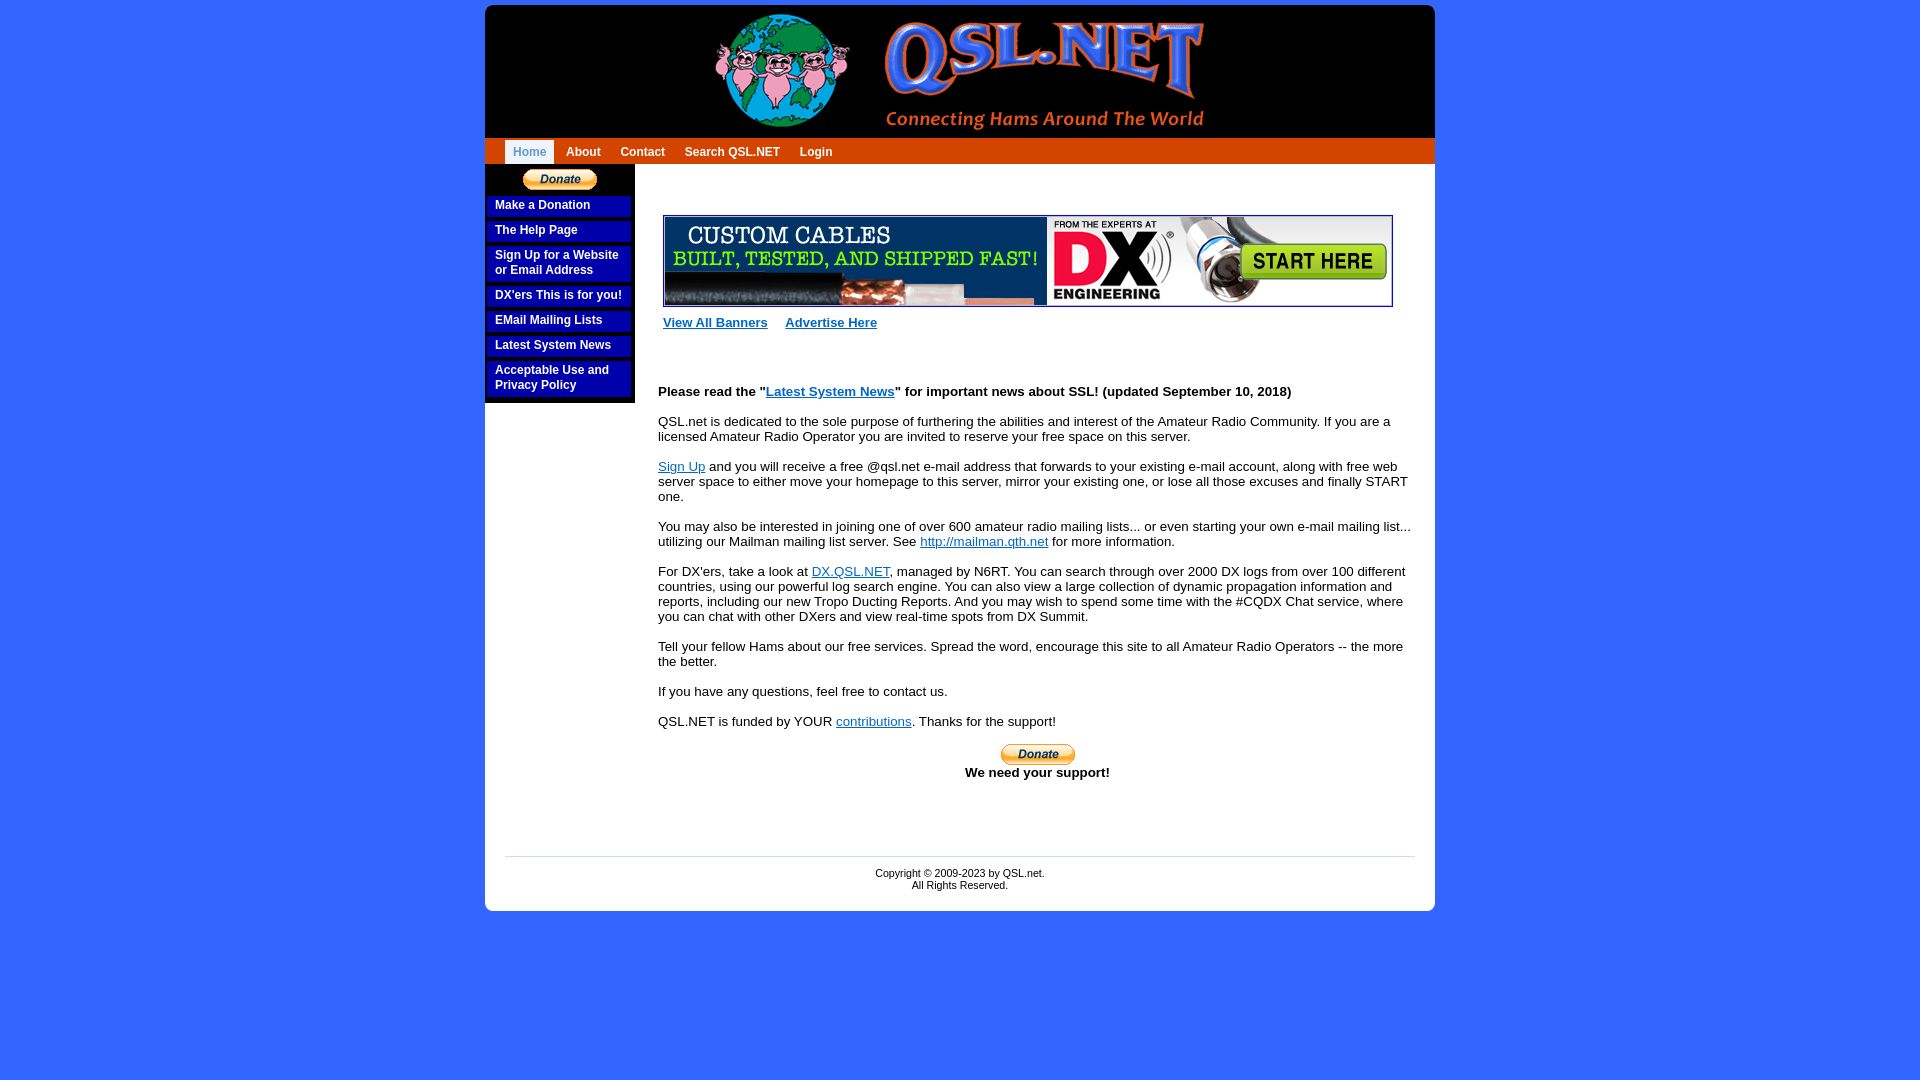 Estado web qsl.net está   ONLINE